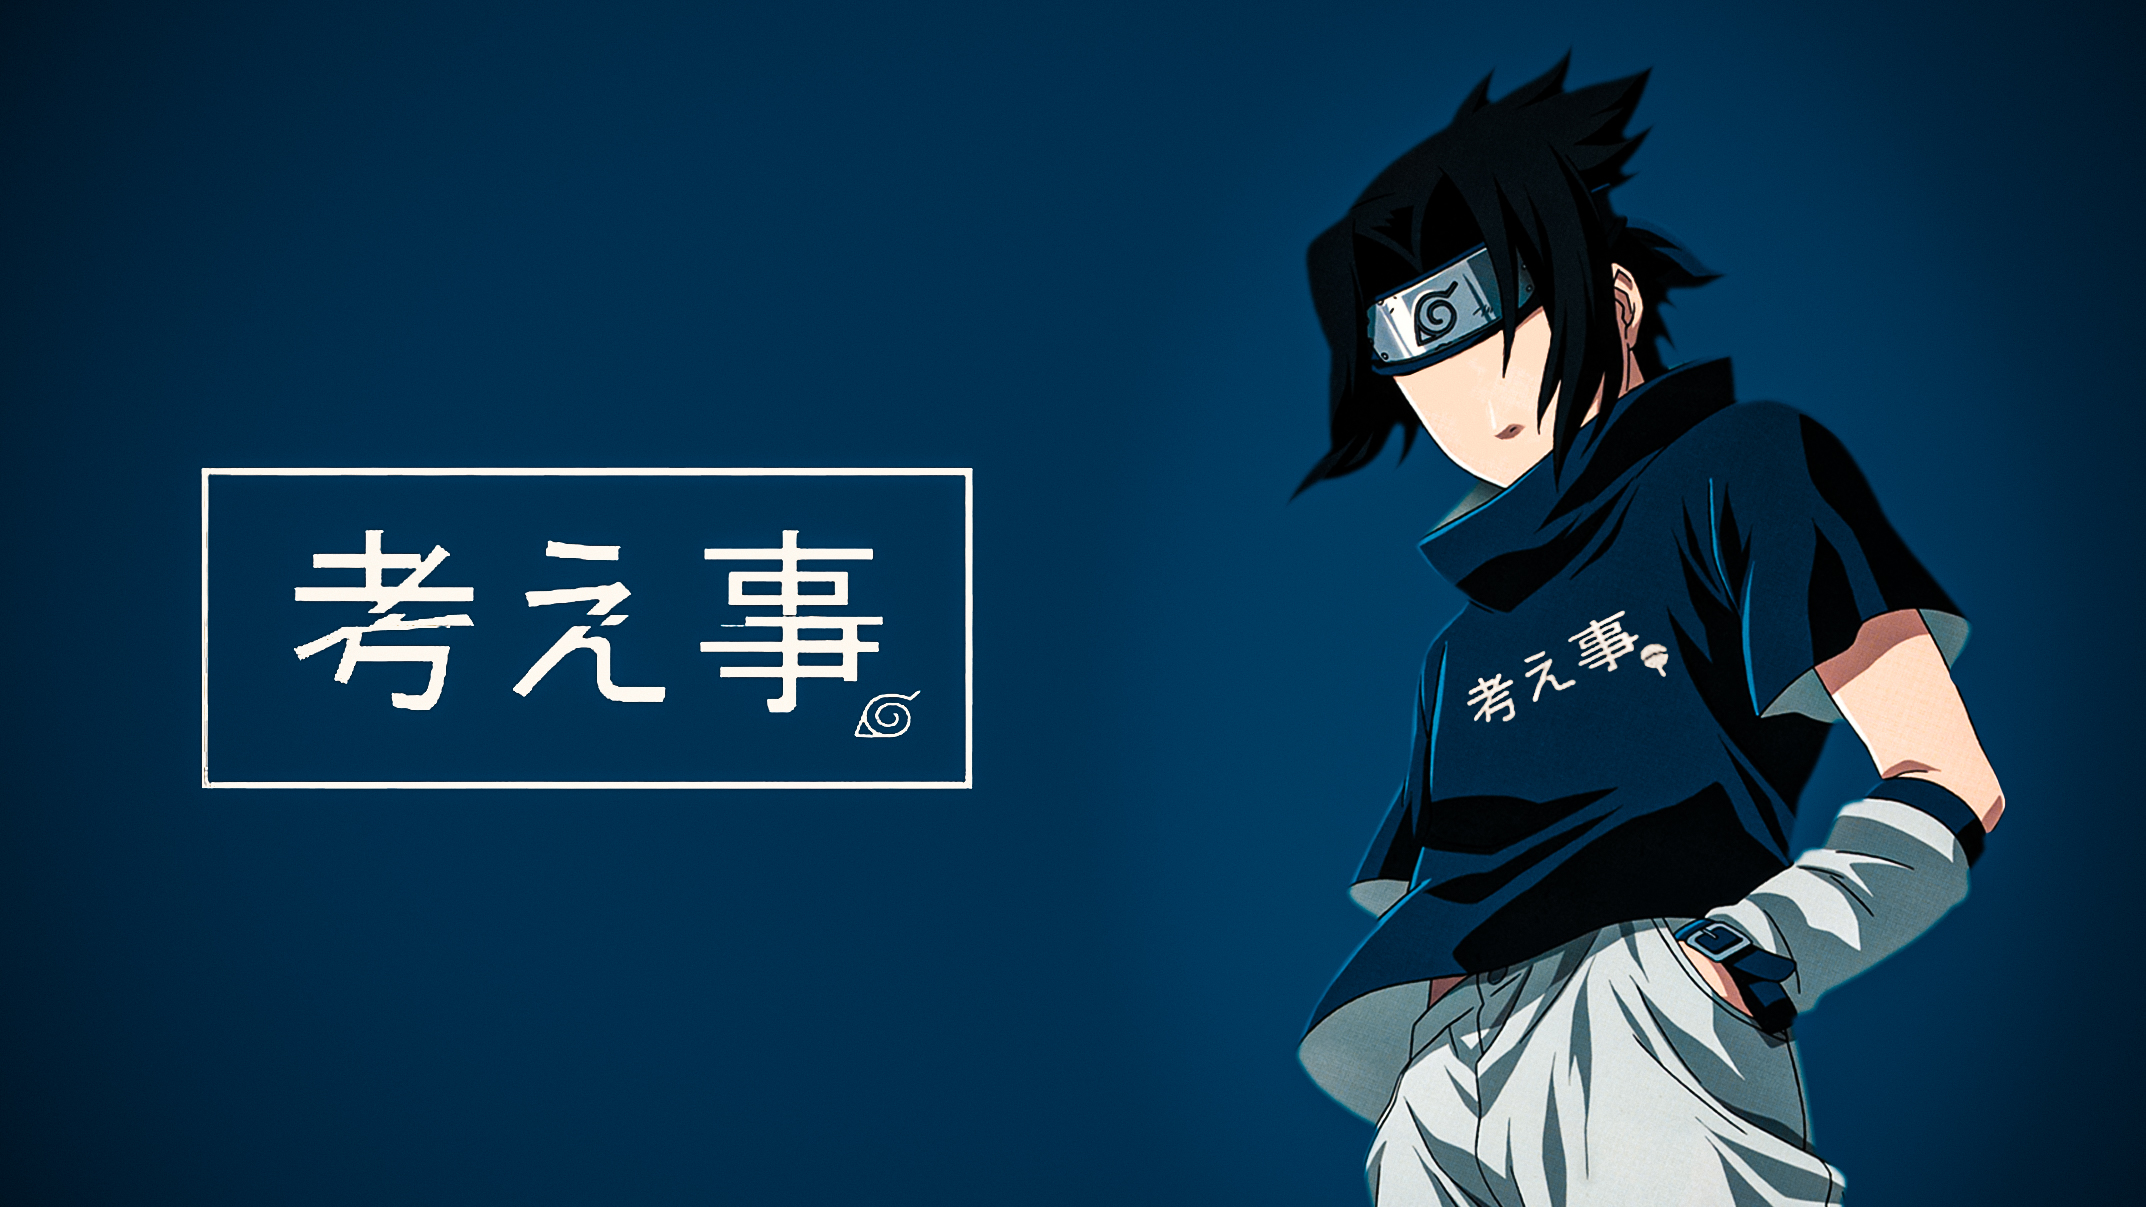 Sasuke Uchiha Digital Art Wallpaper, HD Anime 4K Wallpapers, Images